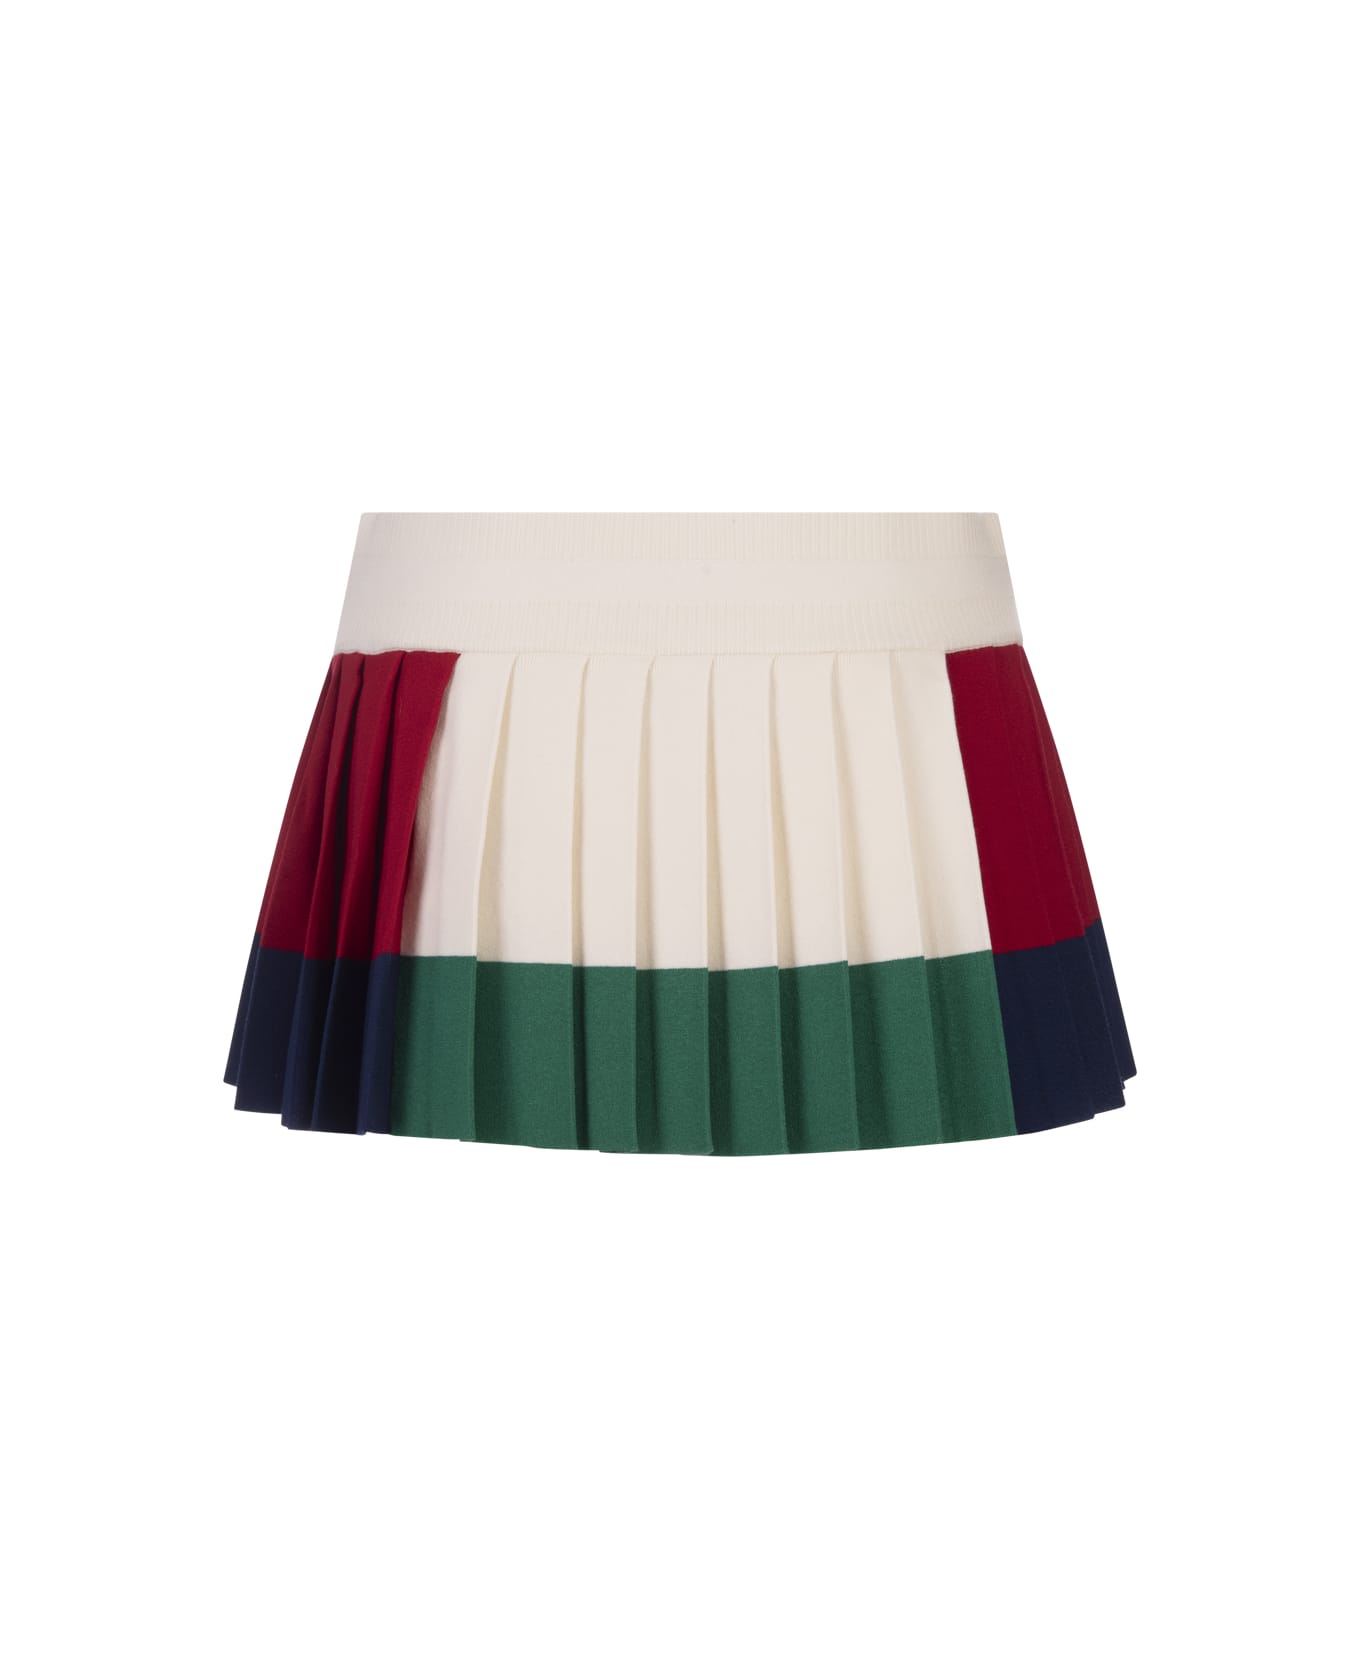 Dsquared2 Multicolour Pleated Mini Skirt - Multicolour